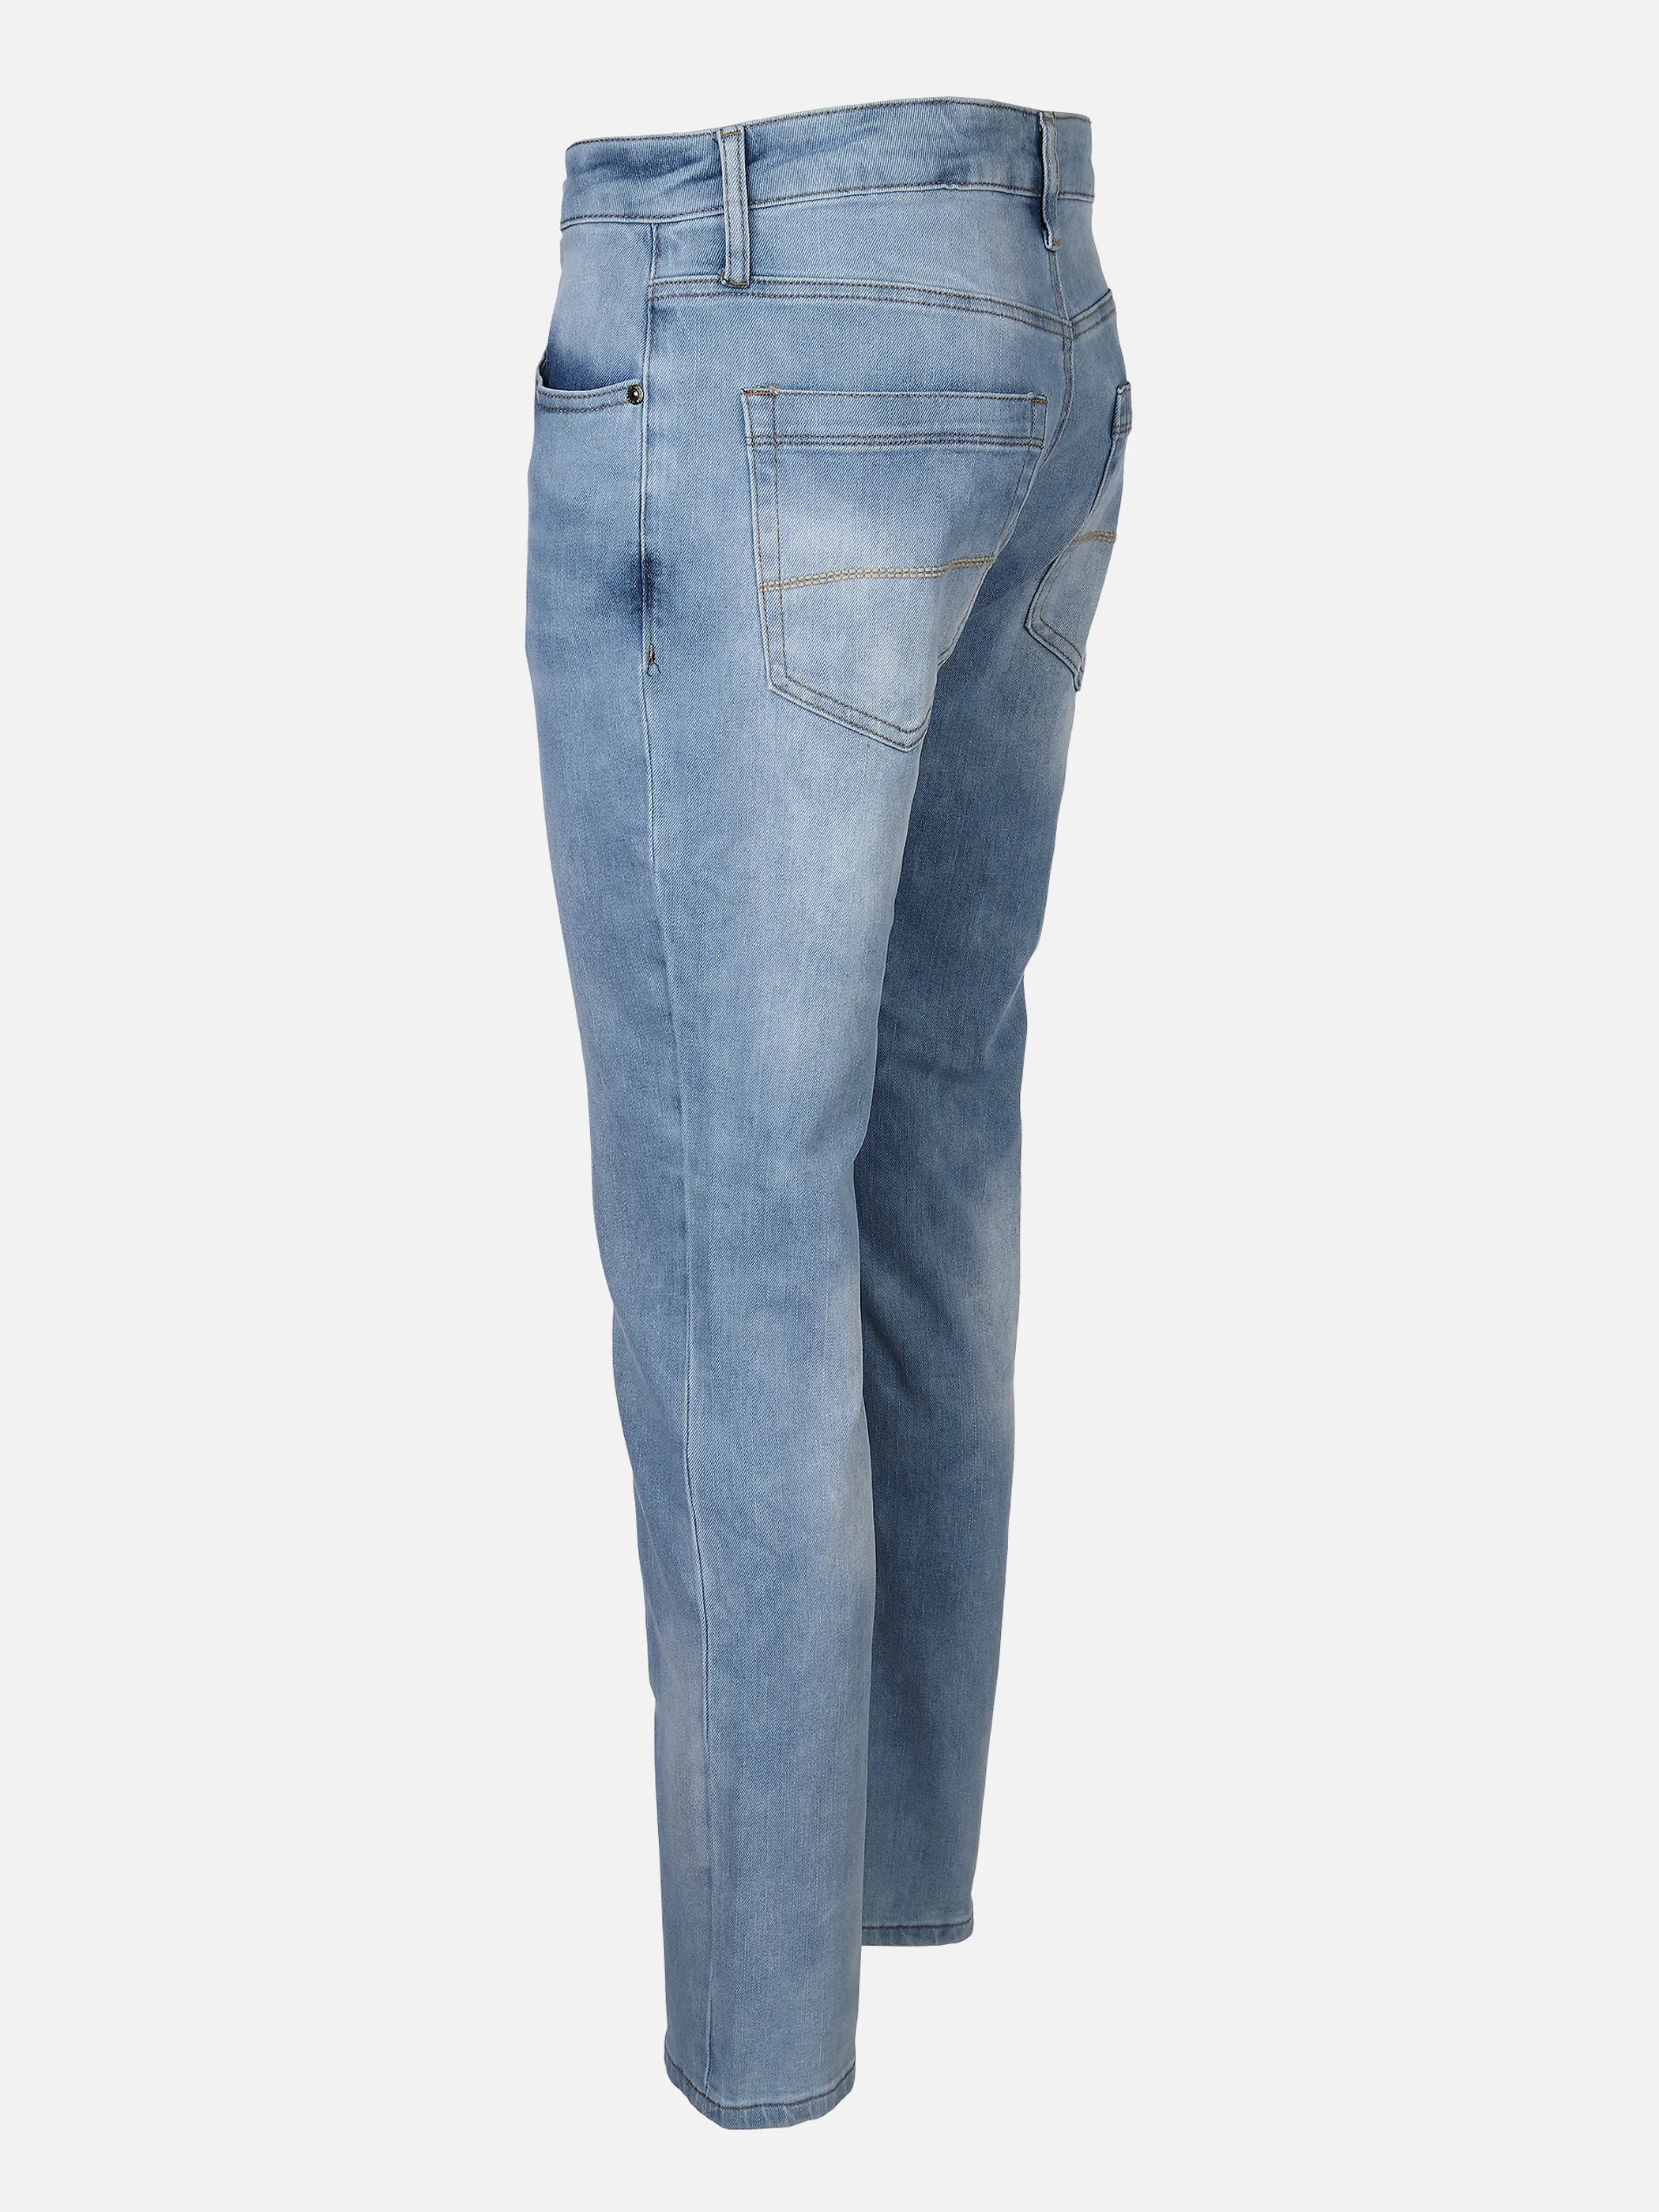 Southern Territory YF-He-5P-Jeans, Patrick Blau 876757 BLUE DENIM 3